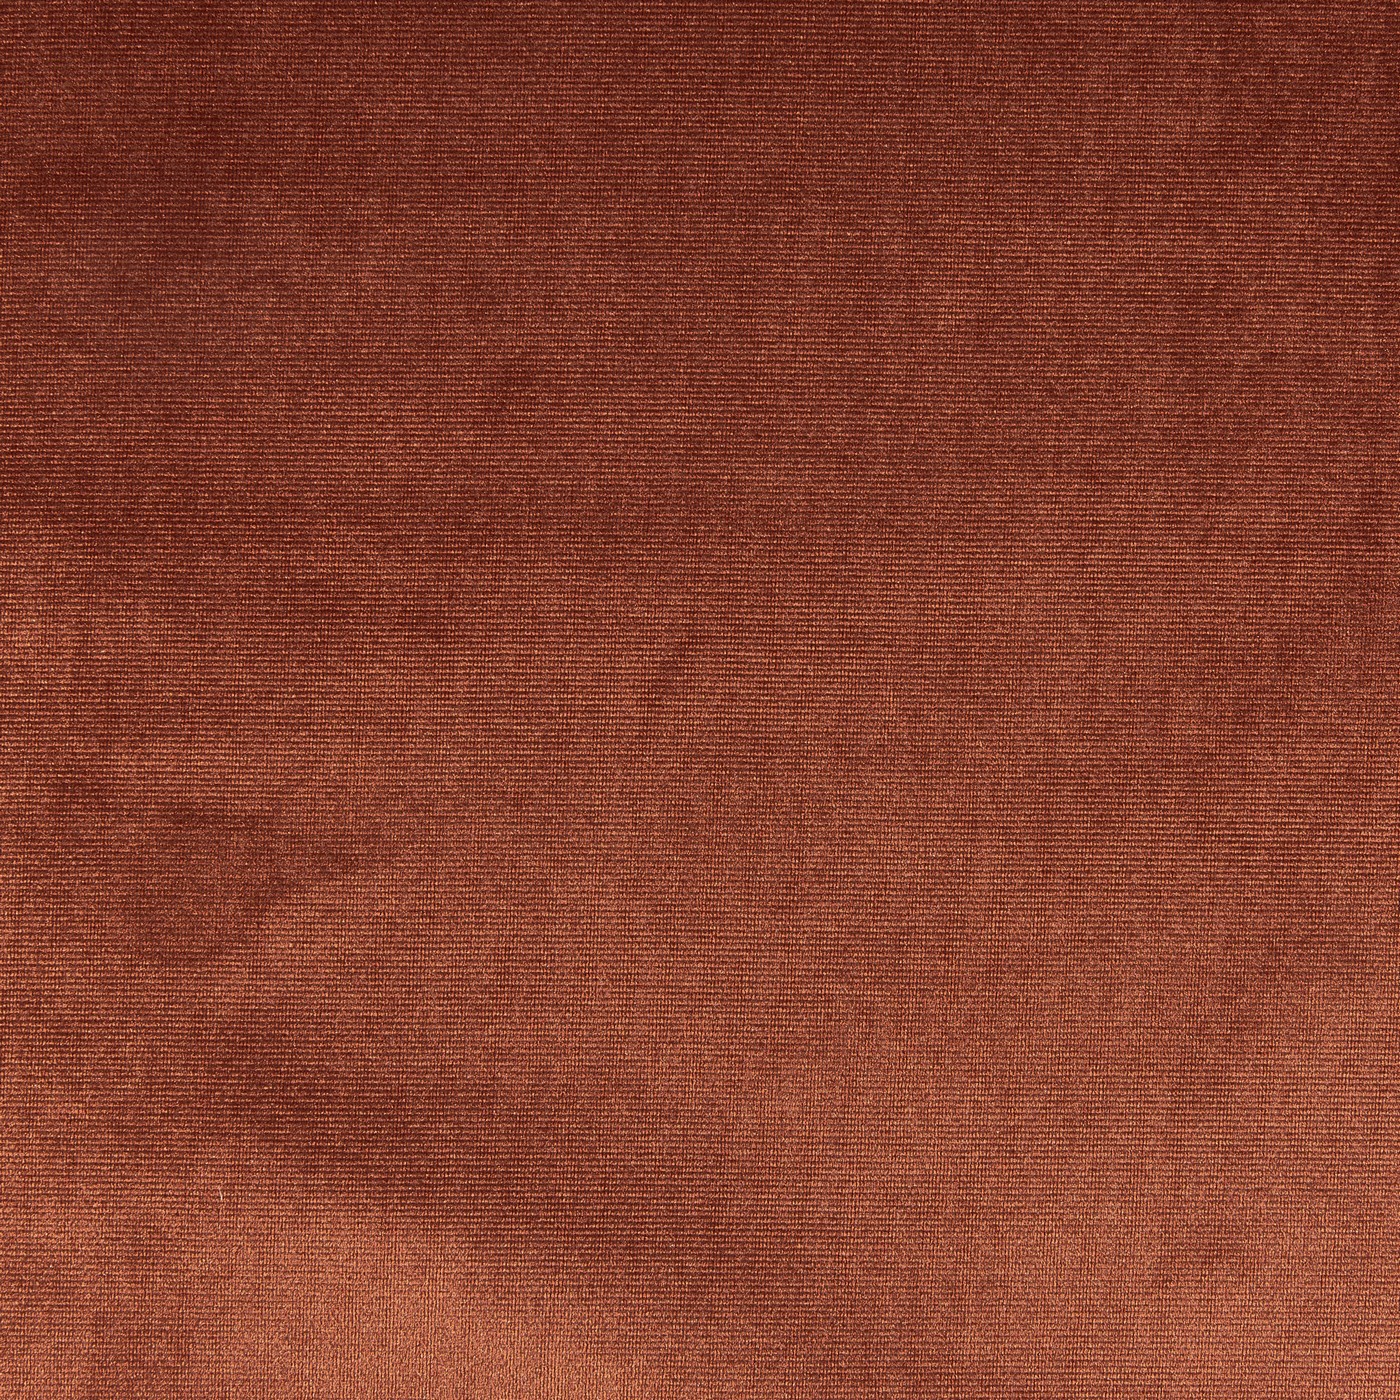 Velour Copper Fabric by Prestigious Textiles